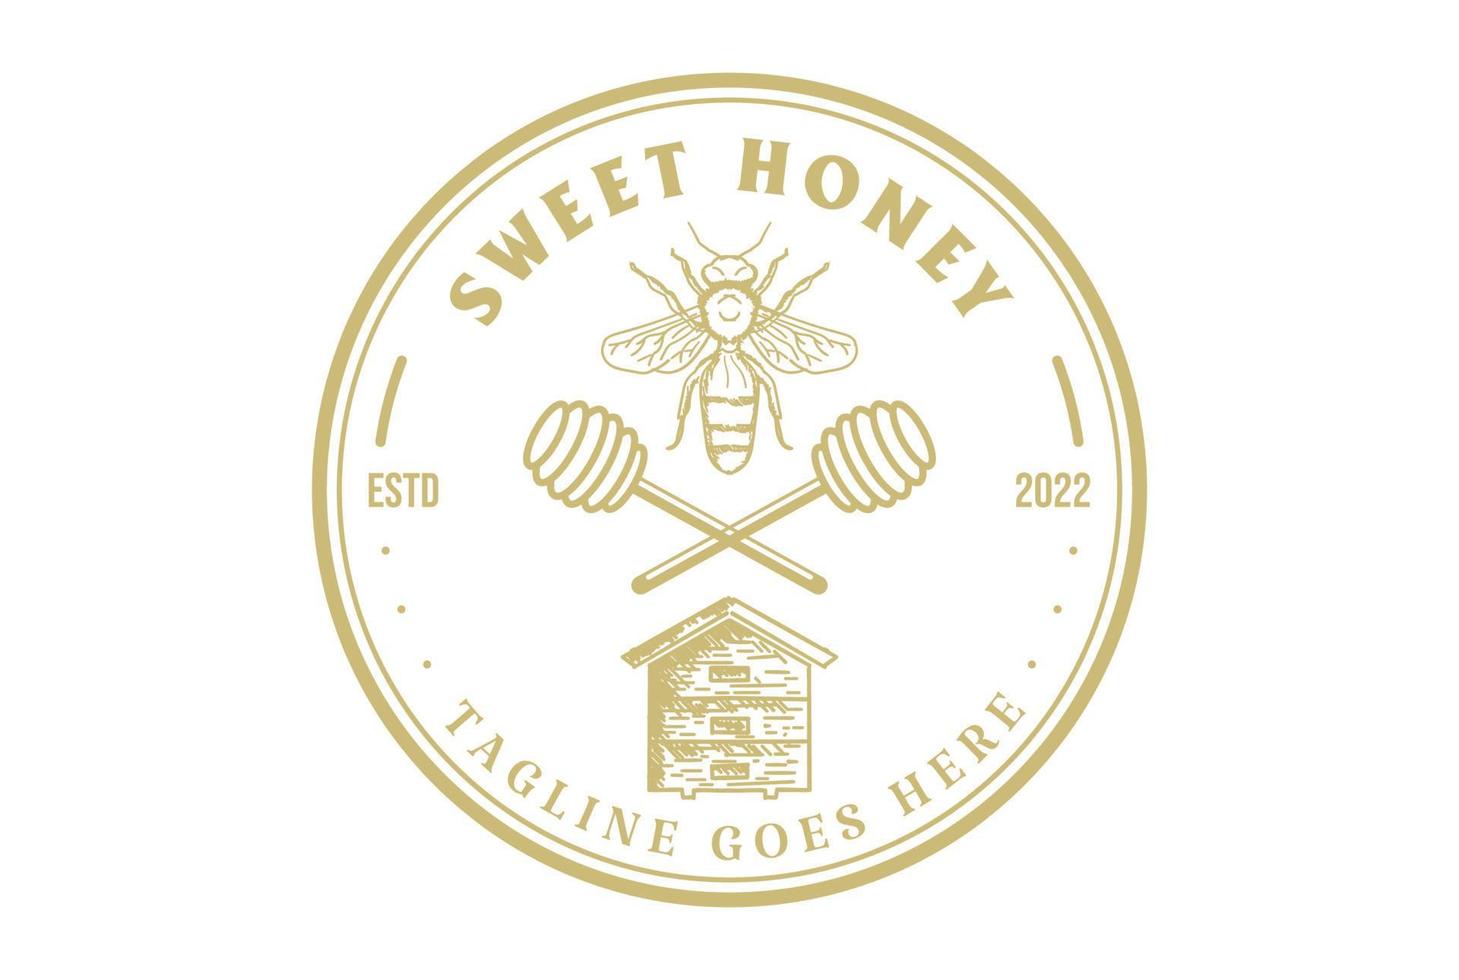 círculo circular redondo dulce abeja melífera granja insignia emblema etiqueta diseño de logotipo vector